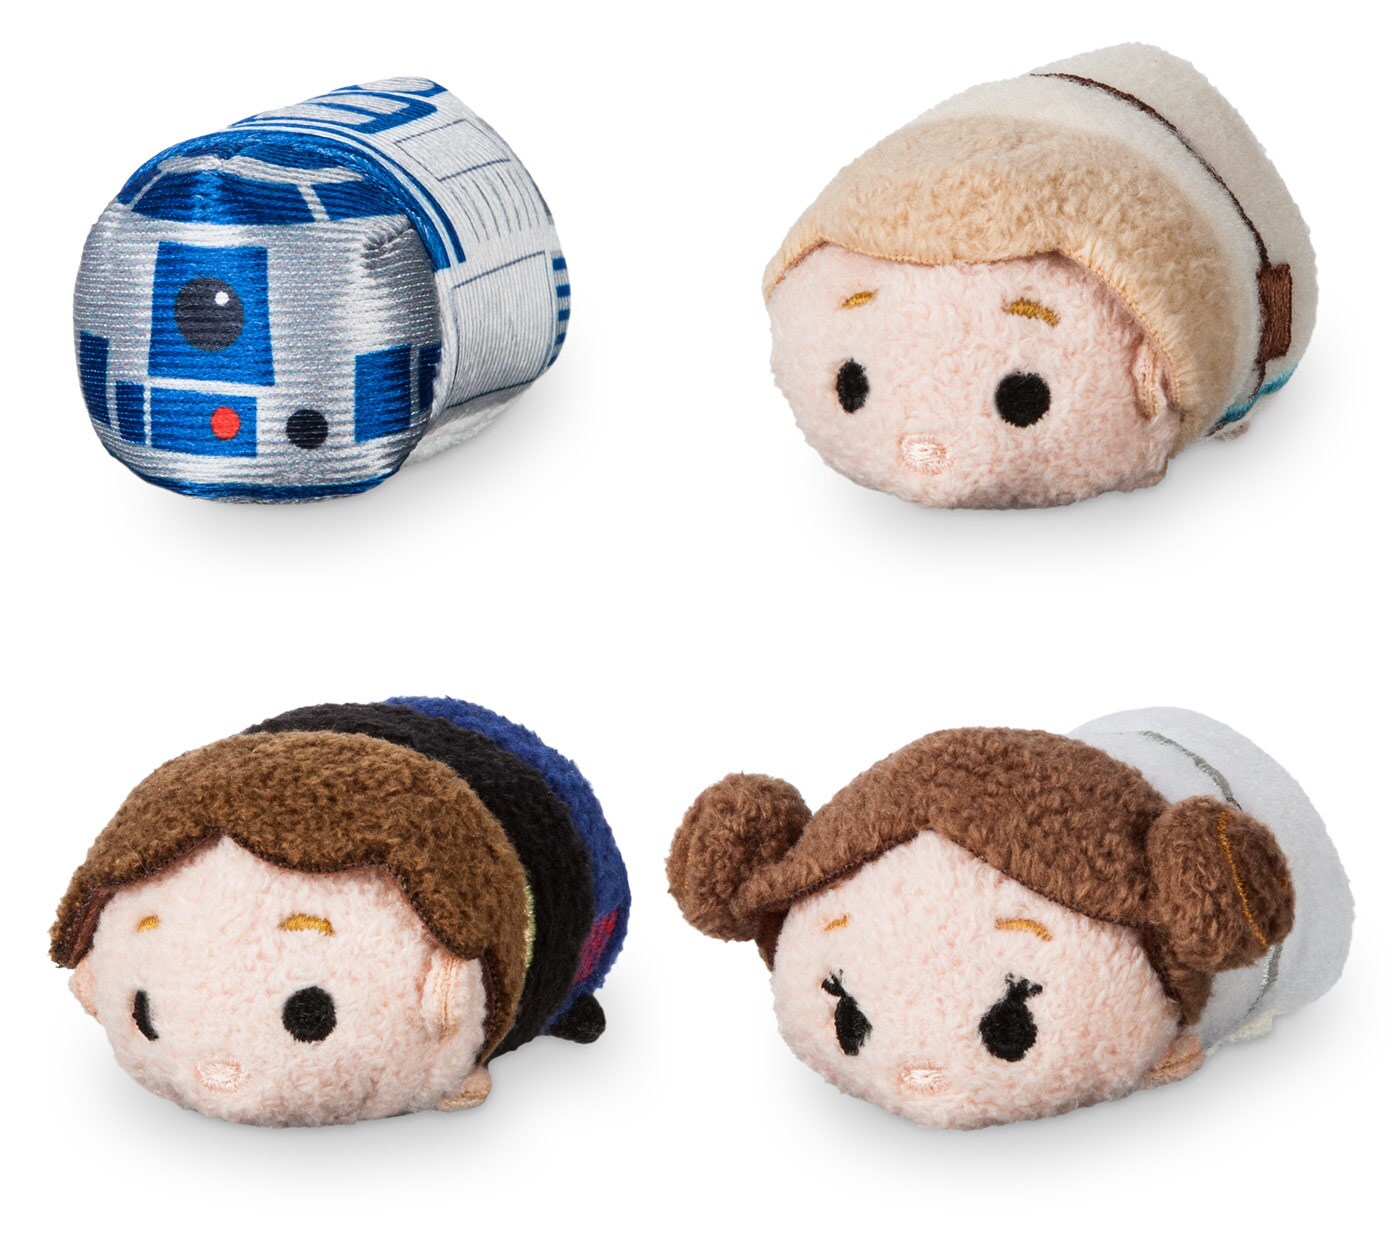 Plush toys of R2-D2, Luke, Han, and Leia.